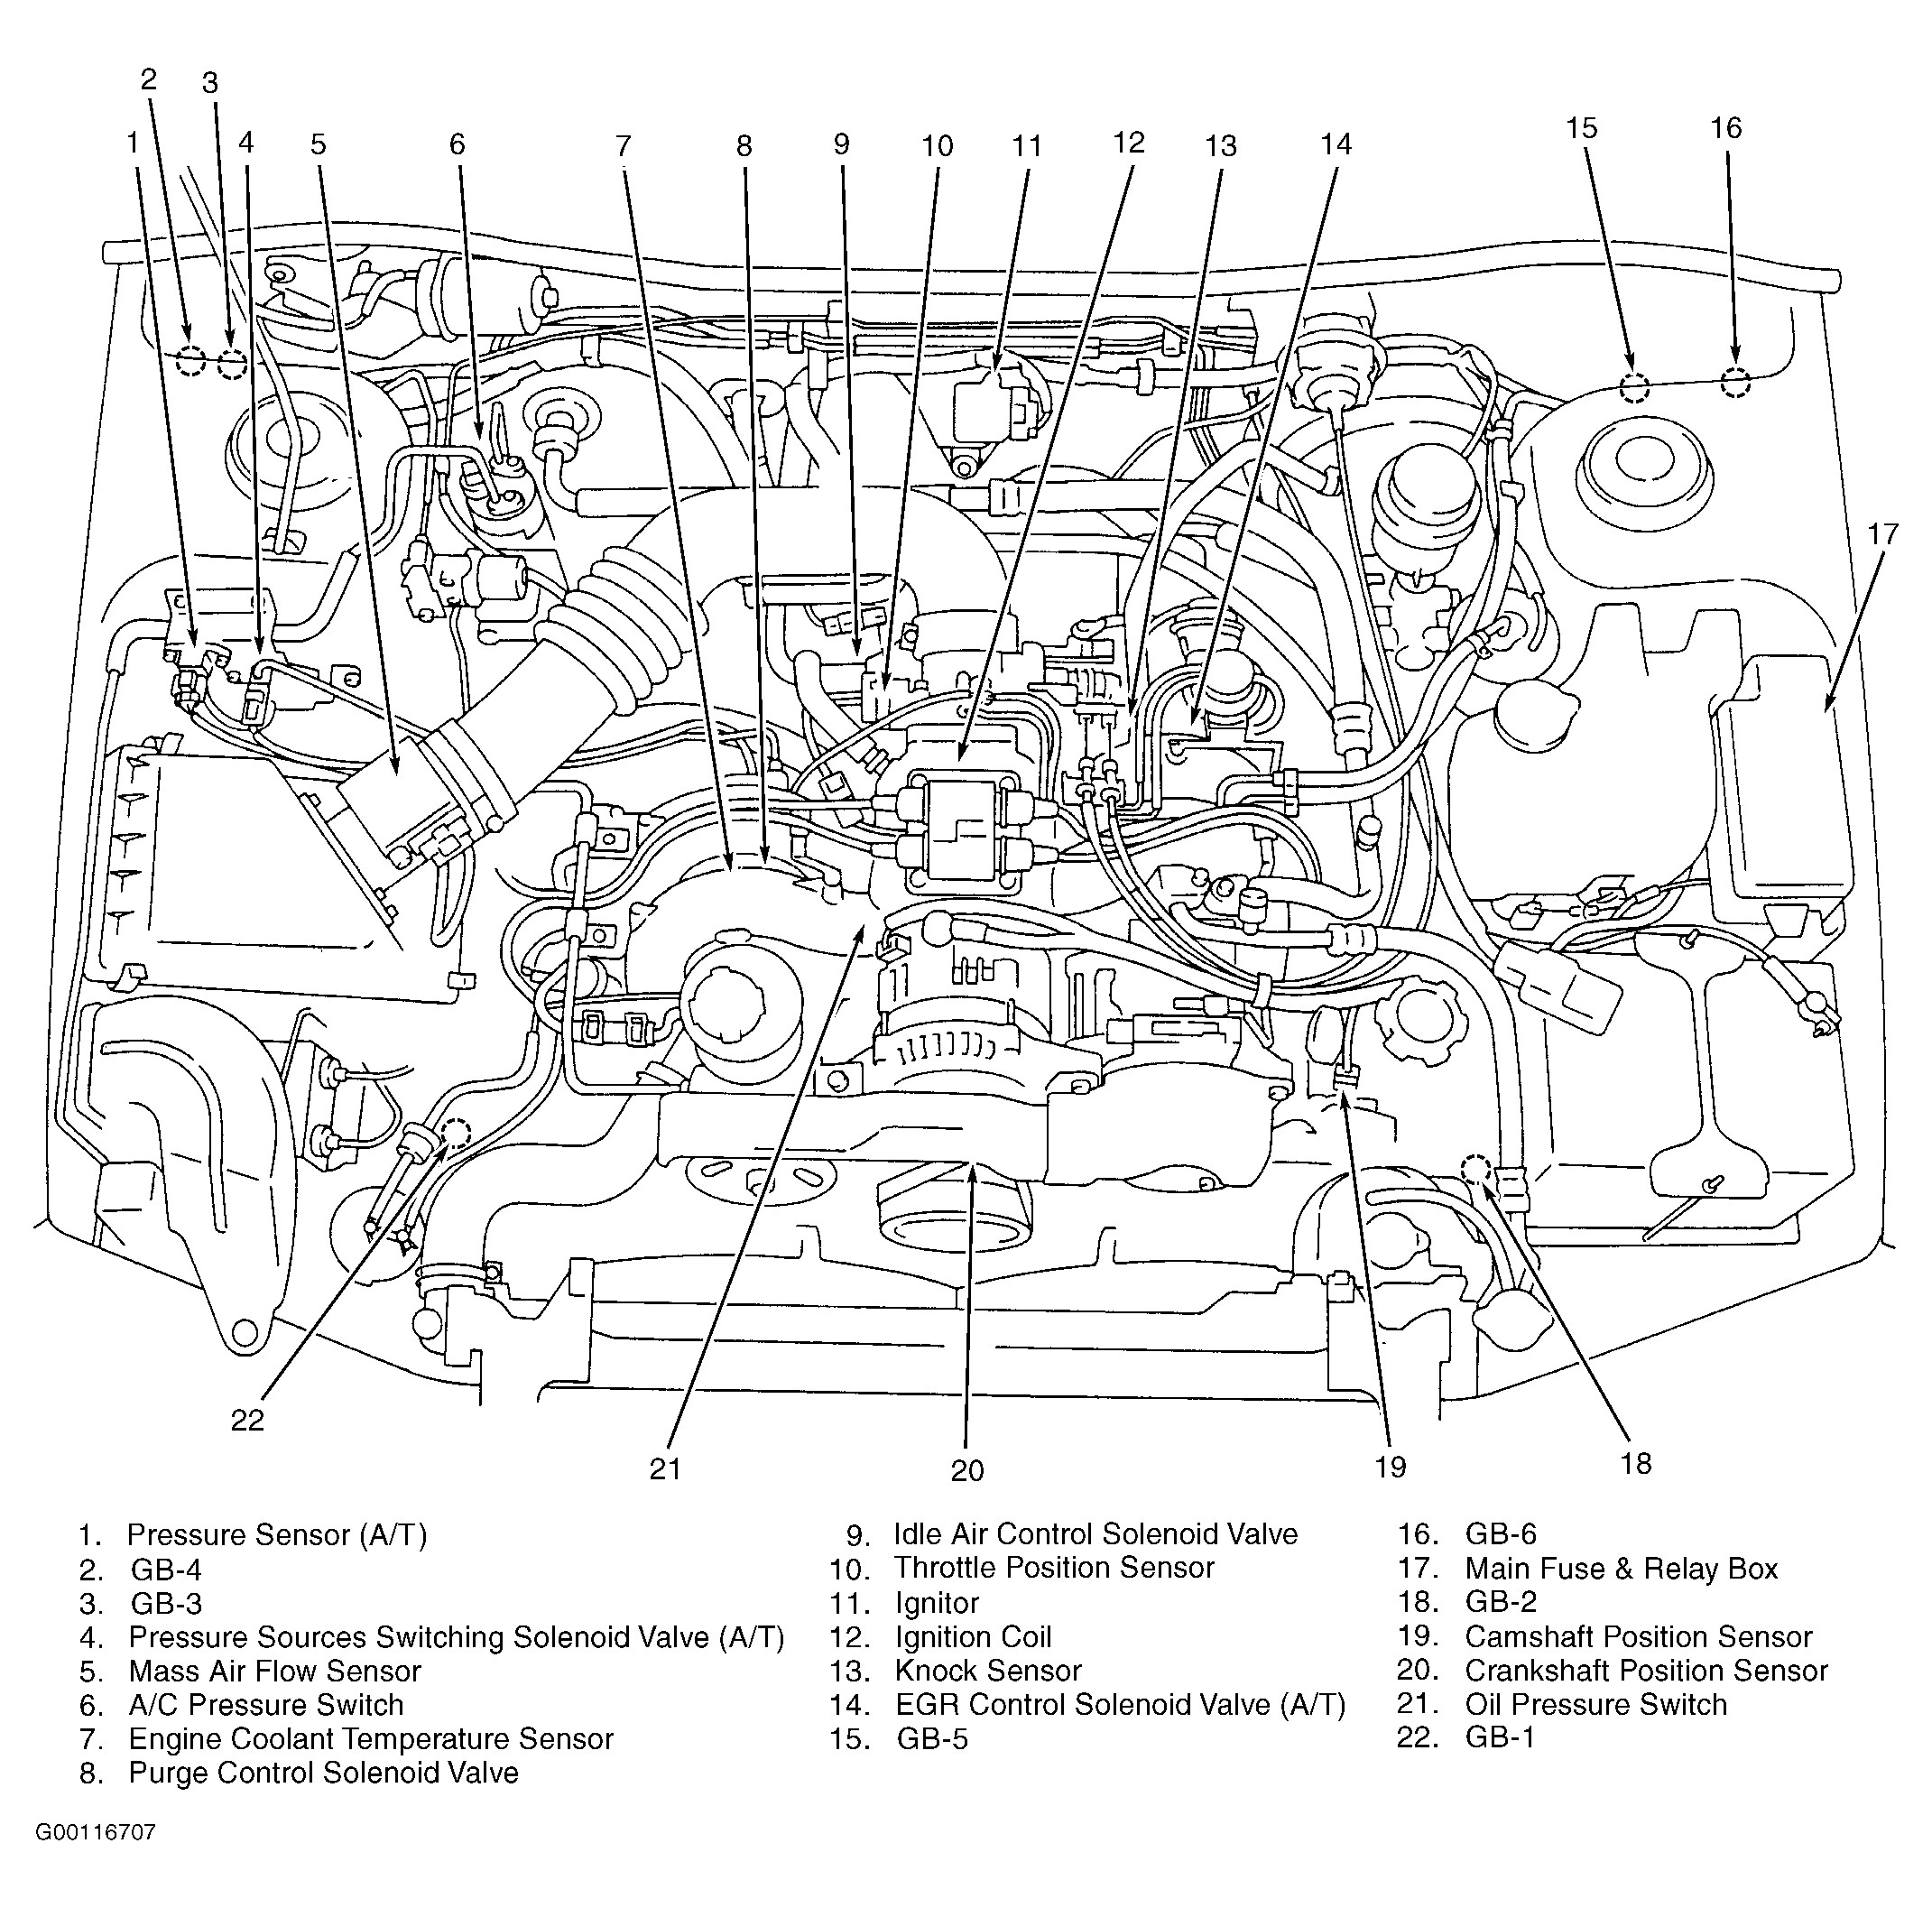 2004 Subaru forester Engine Diagram 1997 Subaru Engine Diagram Wiring Diagrams Of 2004 Subaru forester Engine Diagram